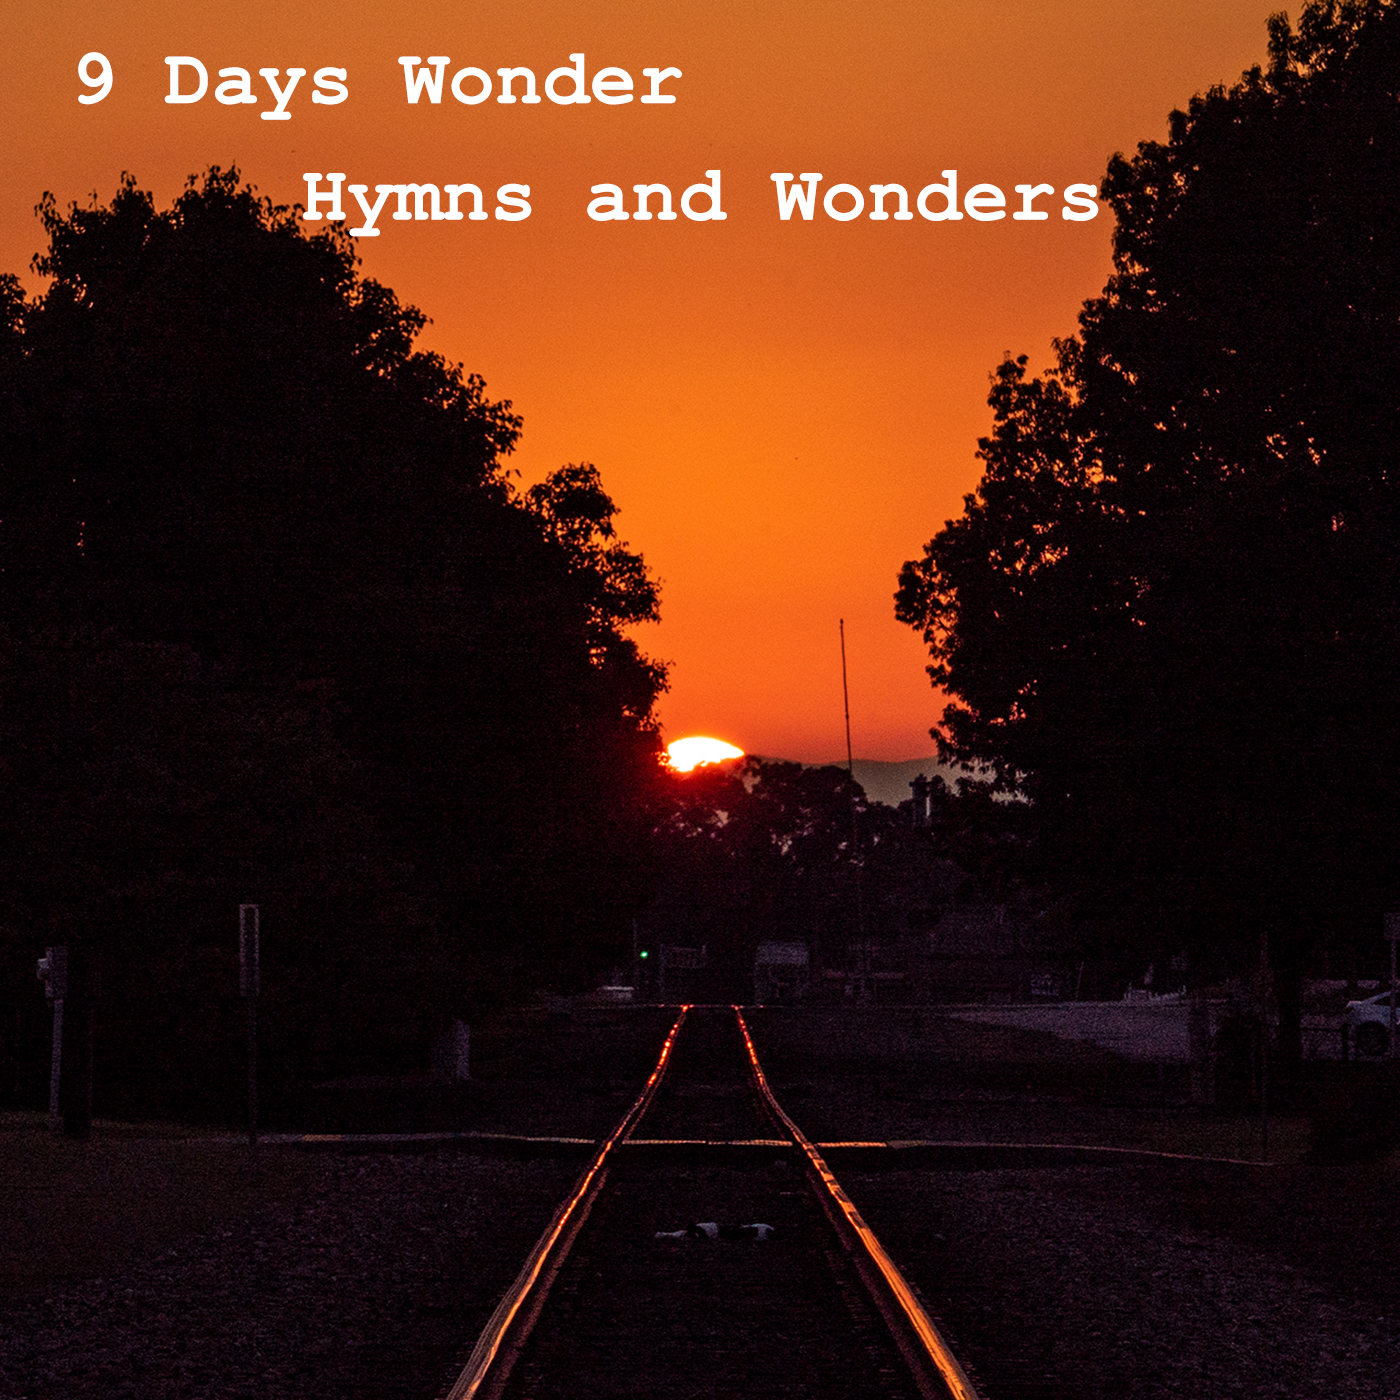 9 Days Wonder - Hymns and Wonders